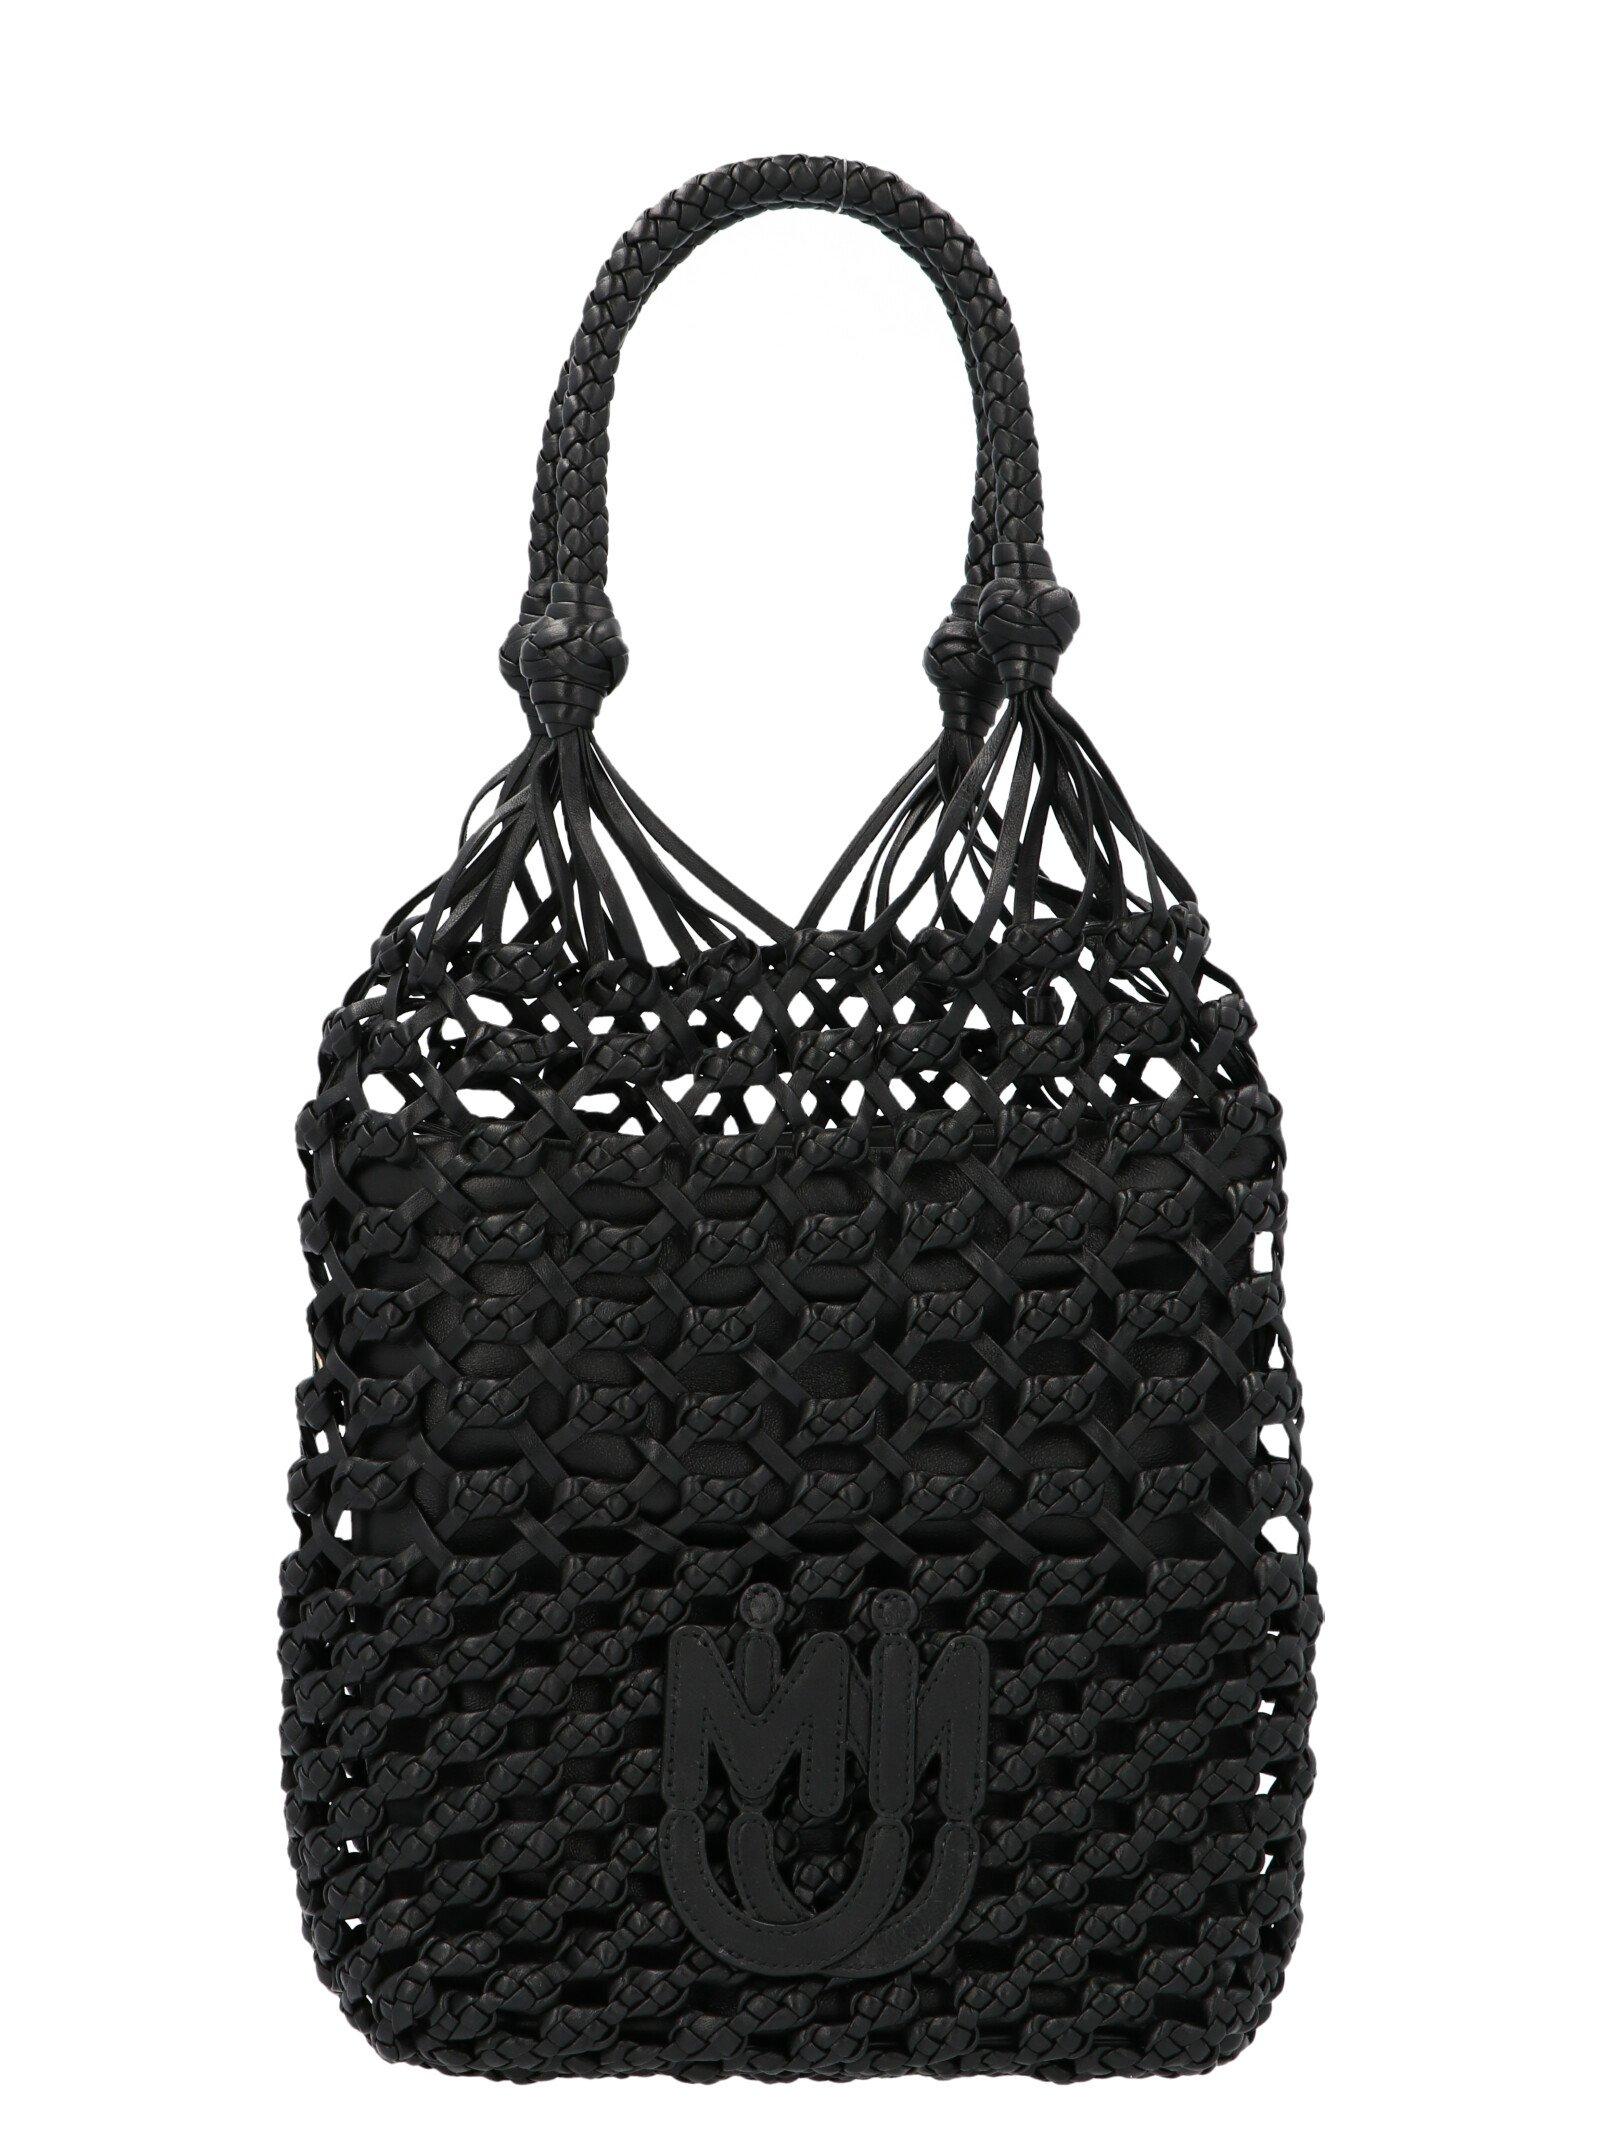 Miu Miu Leather Woven Handbag in Black - Lyst